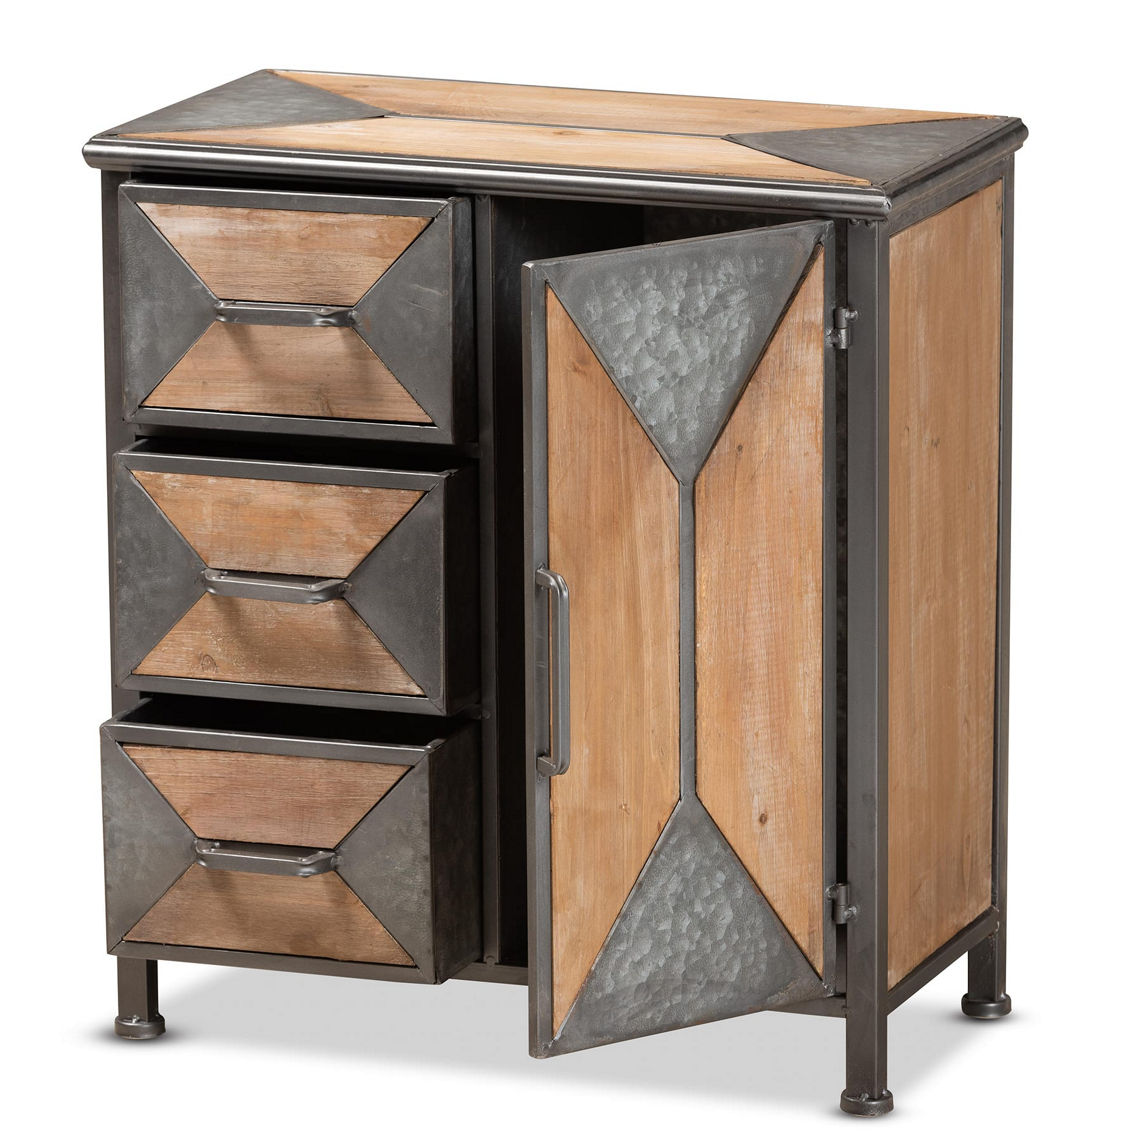 Baxton Studio Laurel Antique Grey Metal and Whitewashed Oak Wood Storage Cabinet - Image 2 of 5